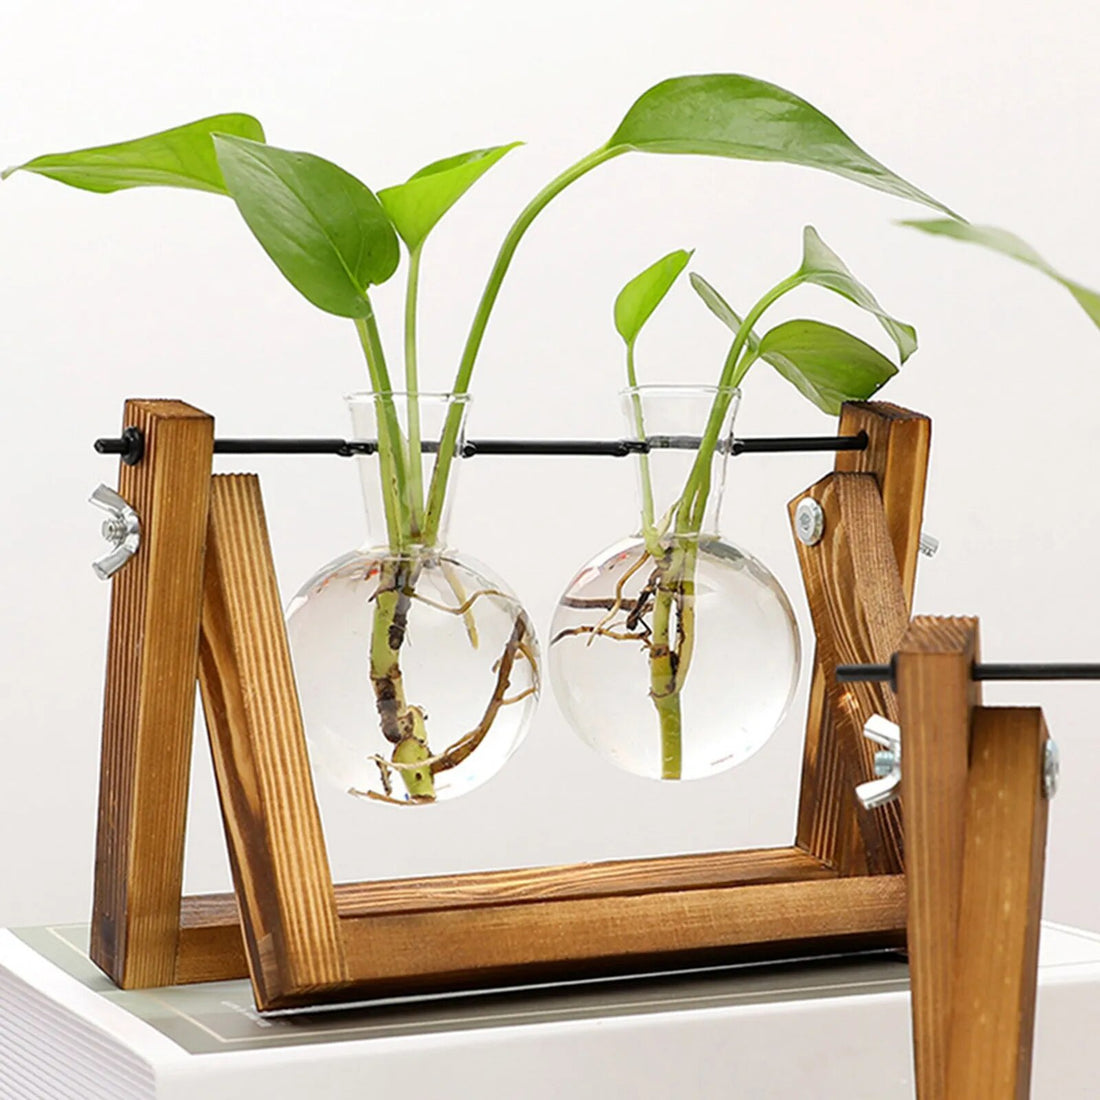 Propagation Station Glass Hydroponic Planter Bulb Terrarium Vase with Retro Wooden Stand for Hydroponics Plants Table Decor